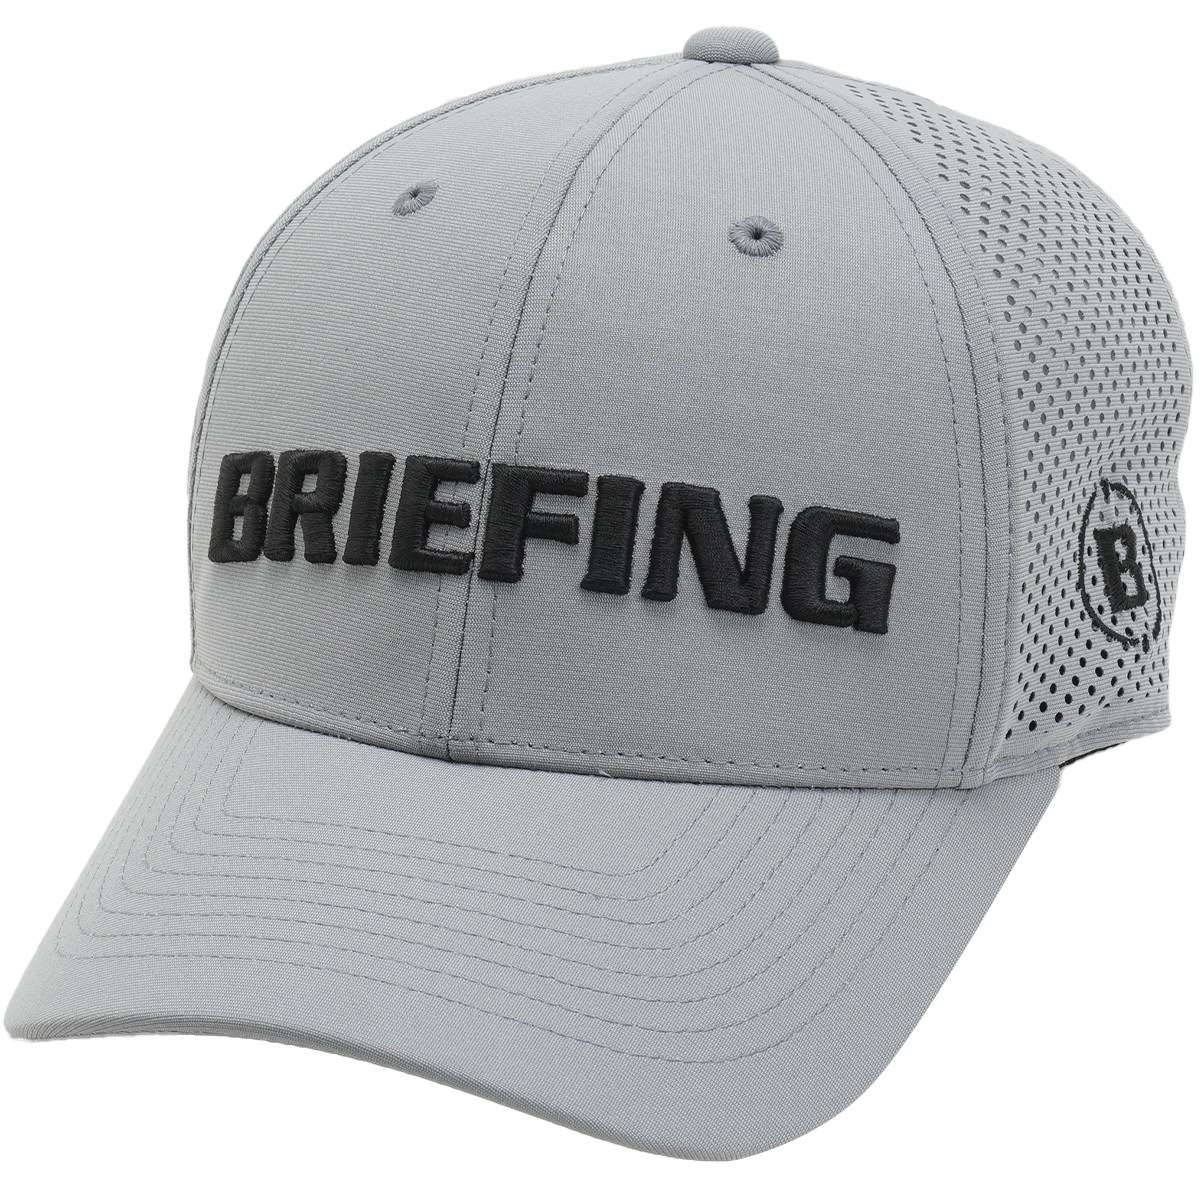 dショッピング |ブリーフィング BRIEFING TOUR パンチング メッシュ